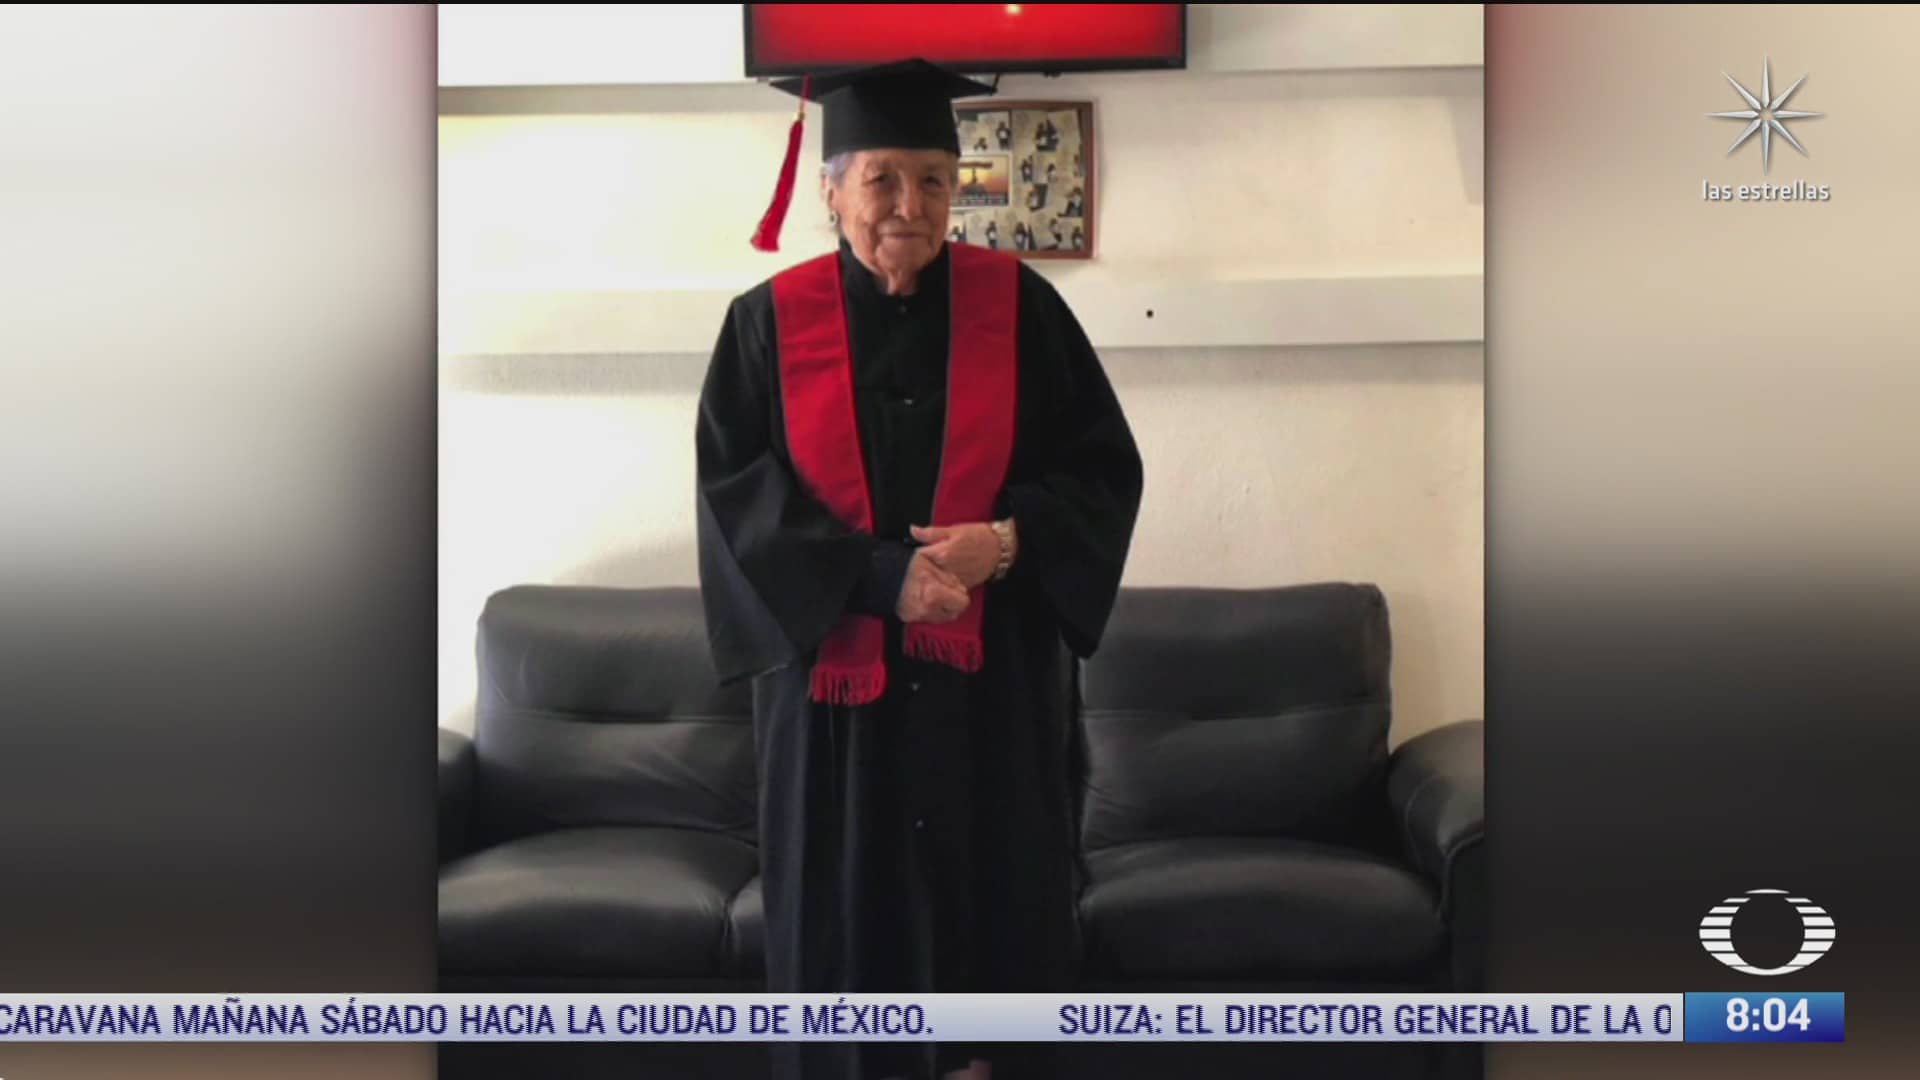 abuelita de 93 anos se gradua en administracion de empresas